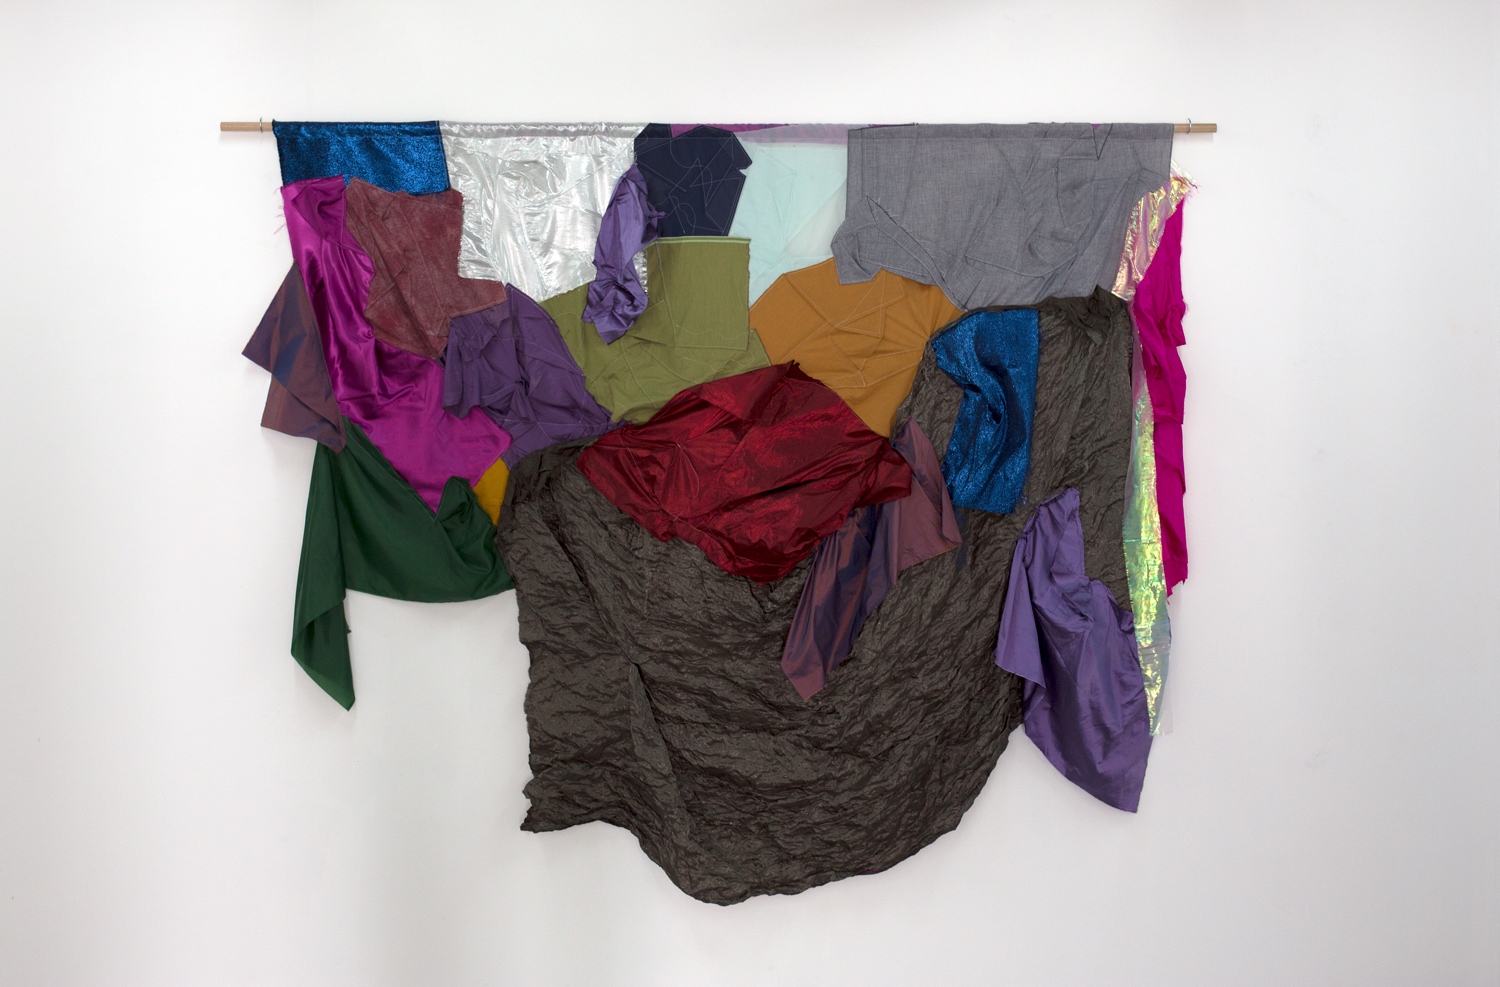   In soft fabric, you bury yourself , 2019, silk, cotton, linen, polyester, thread, Tasmanian oak dowel, cup hooks, 187 x 240cm  Photo: Xavier Burrow 